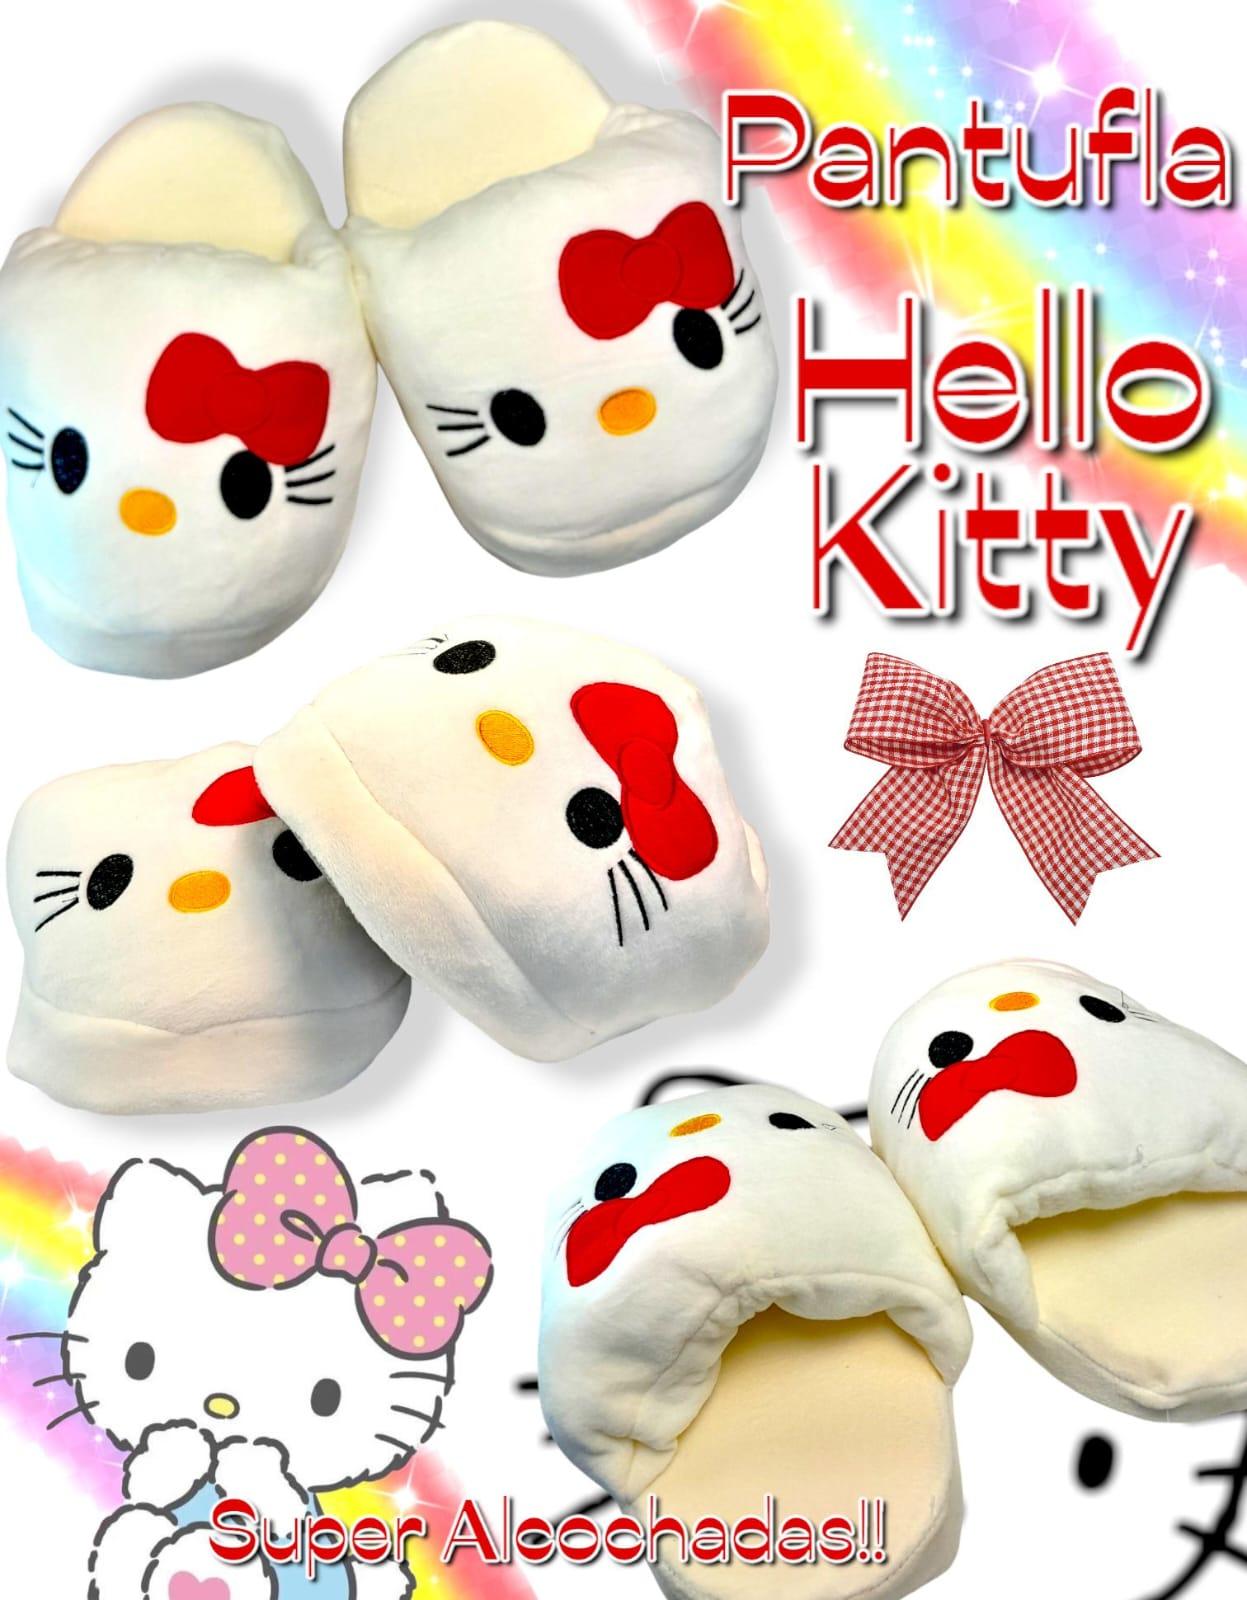 Pantufla Hello Kitty Super Alcochadas